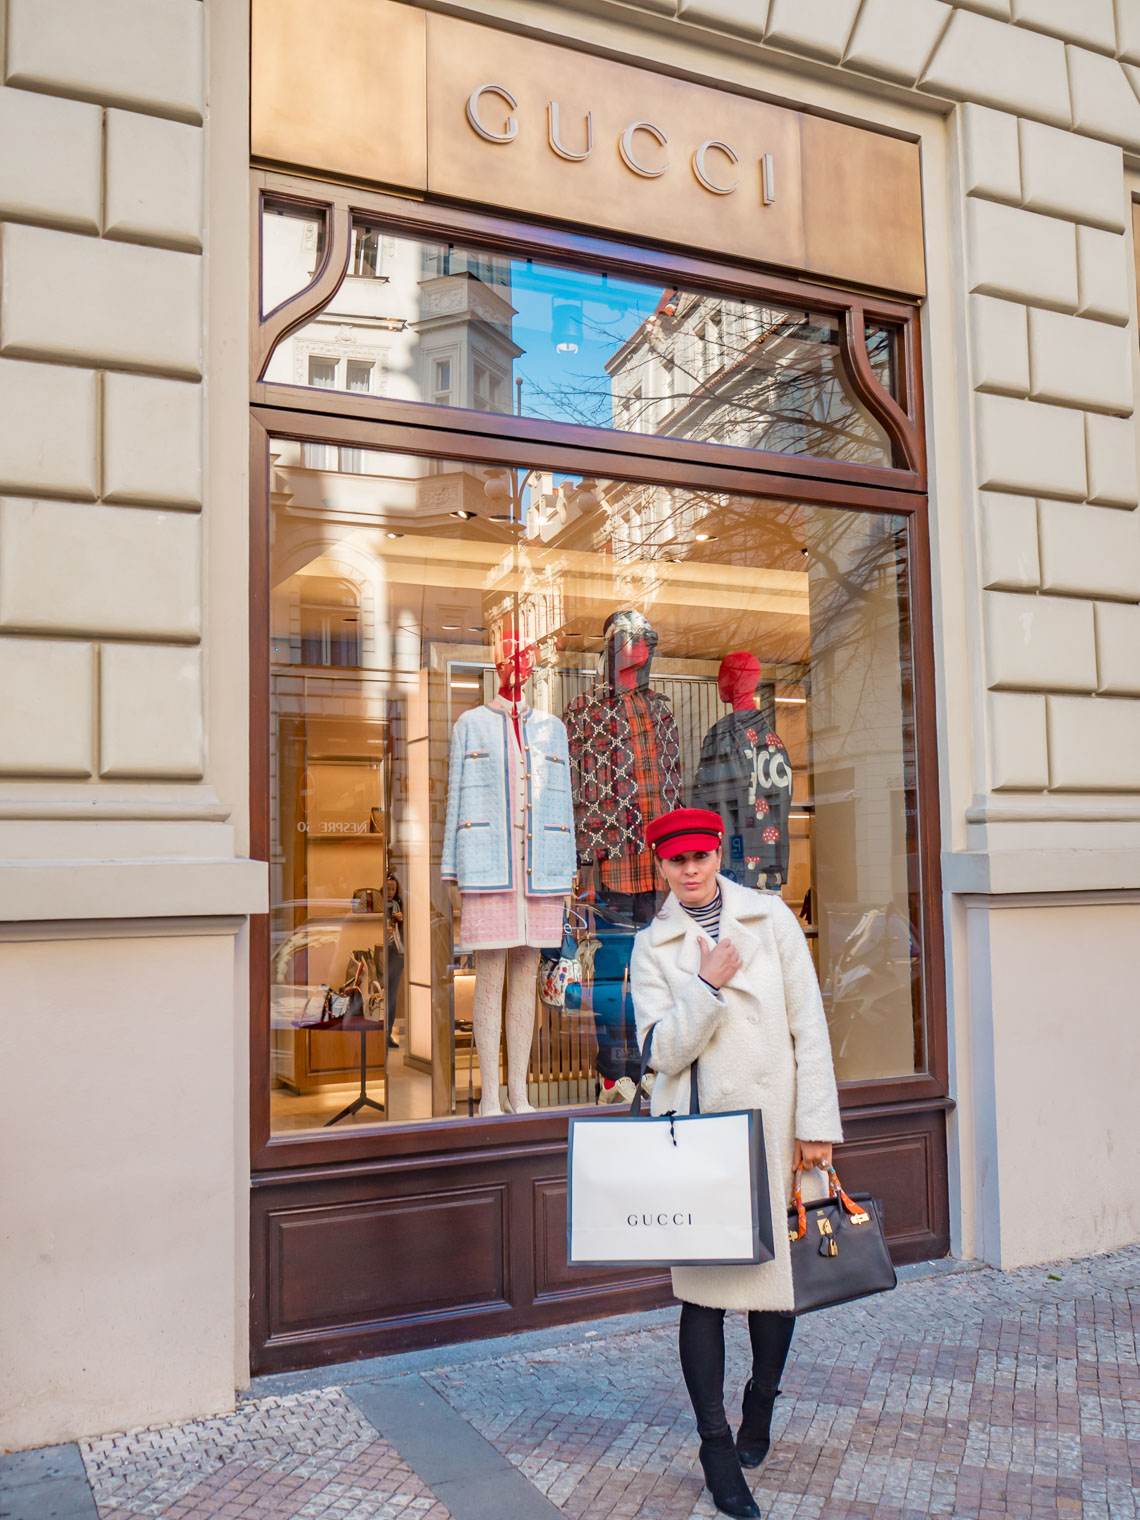 Gucci at Parizska street Prague